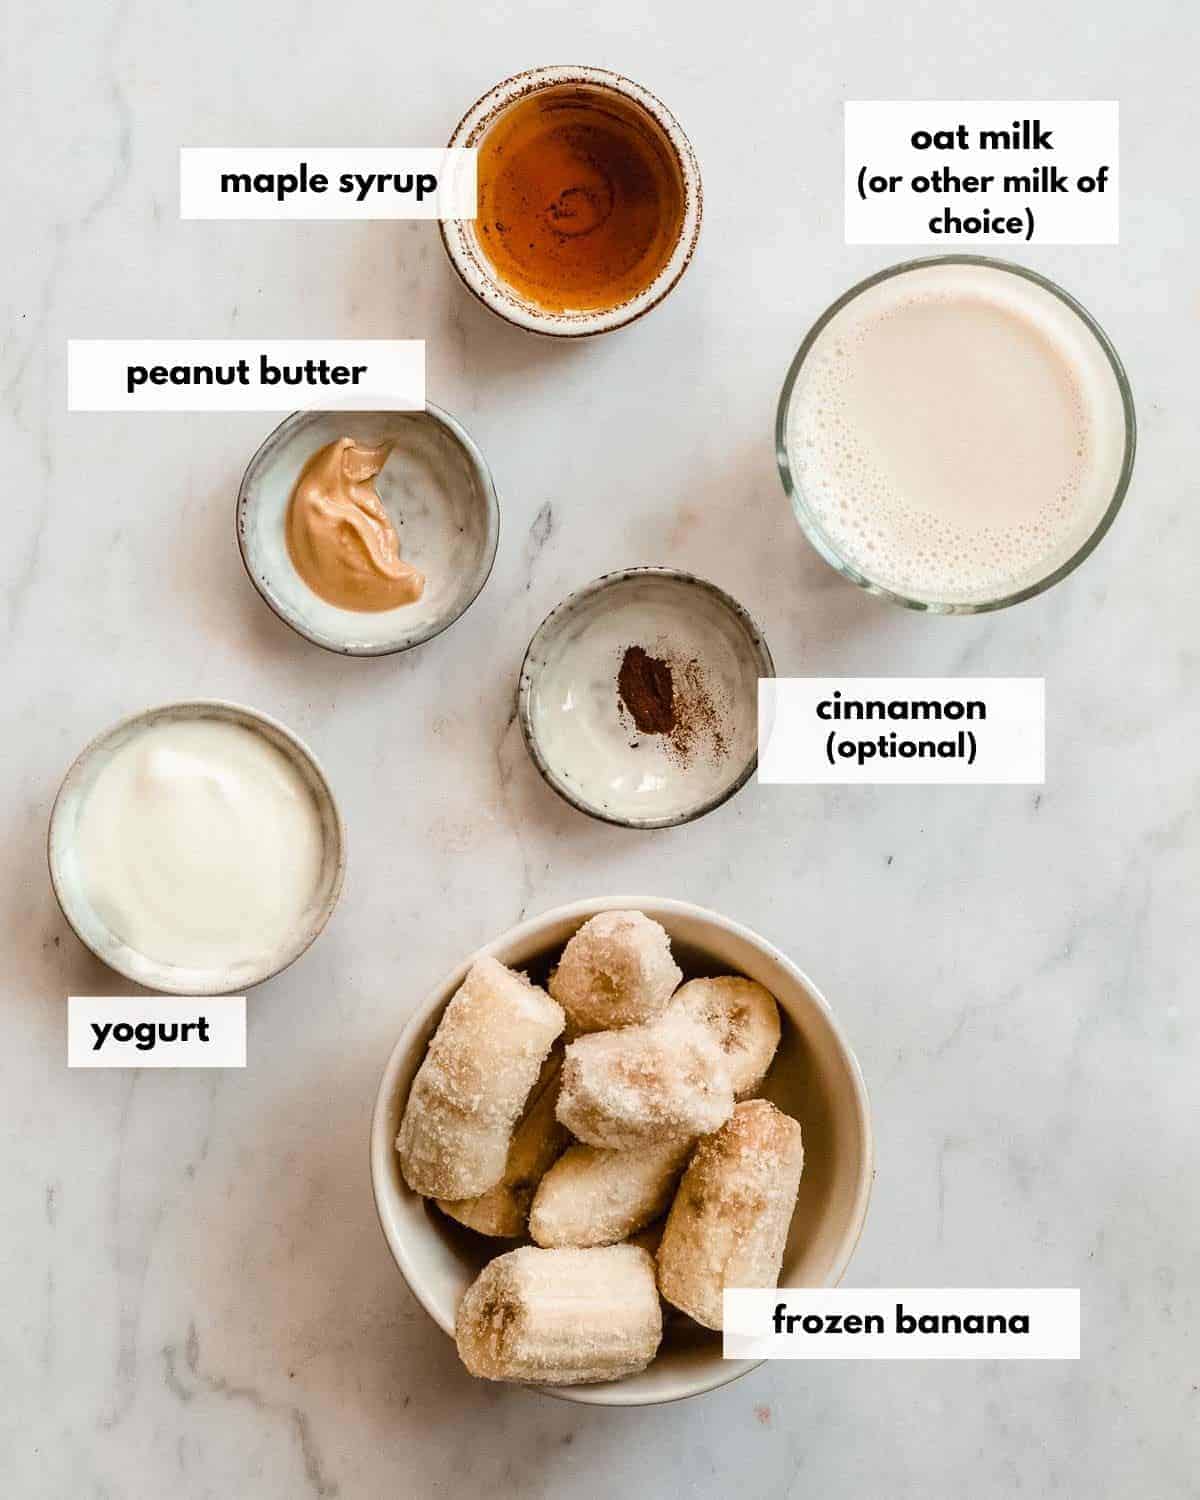 all ingredients needed to make banana milkshake without ice cream.